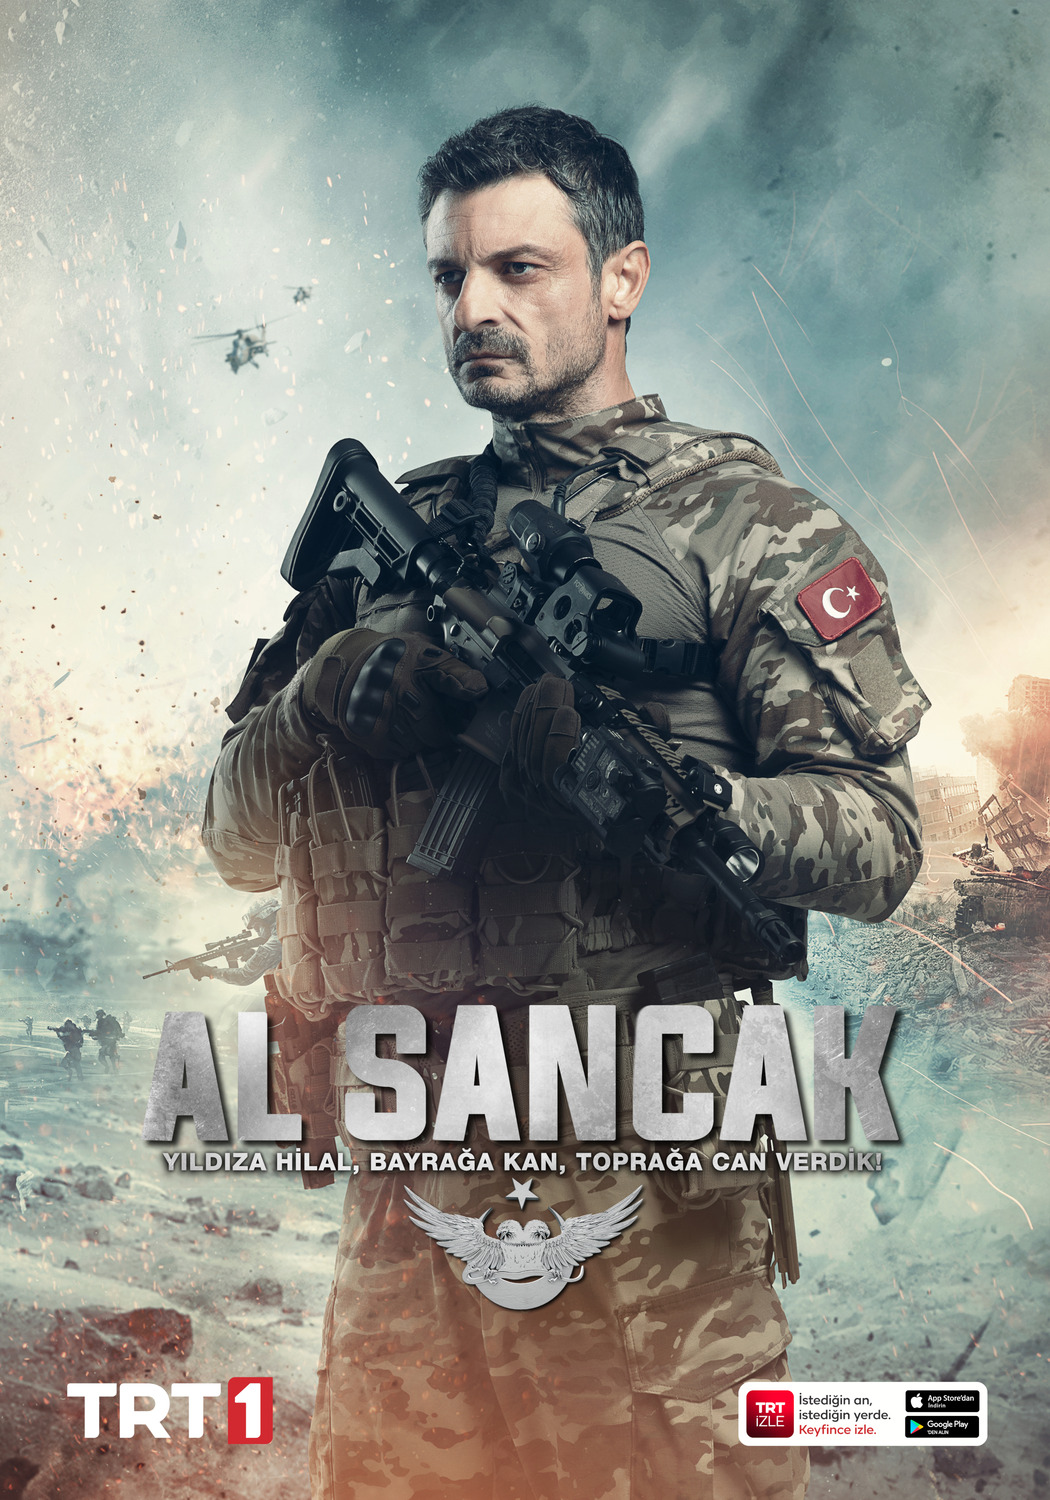 Extra Large TV Poster Image for Al Sancak (#20 of 20)